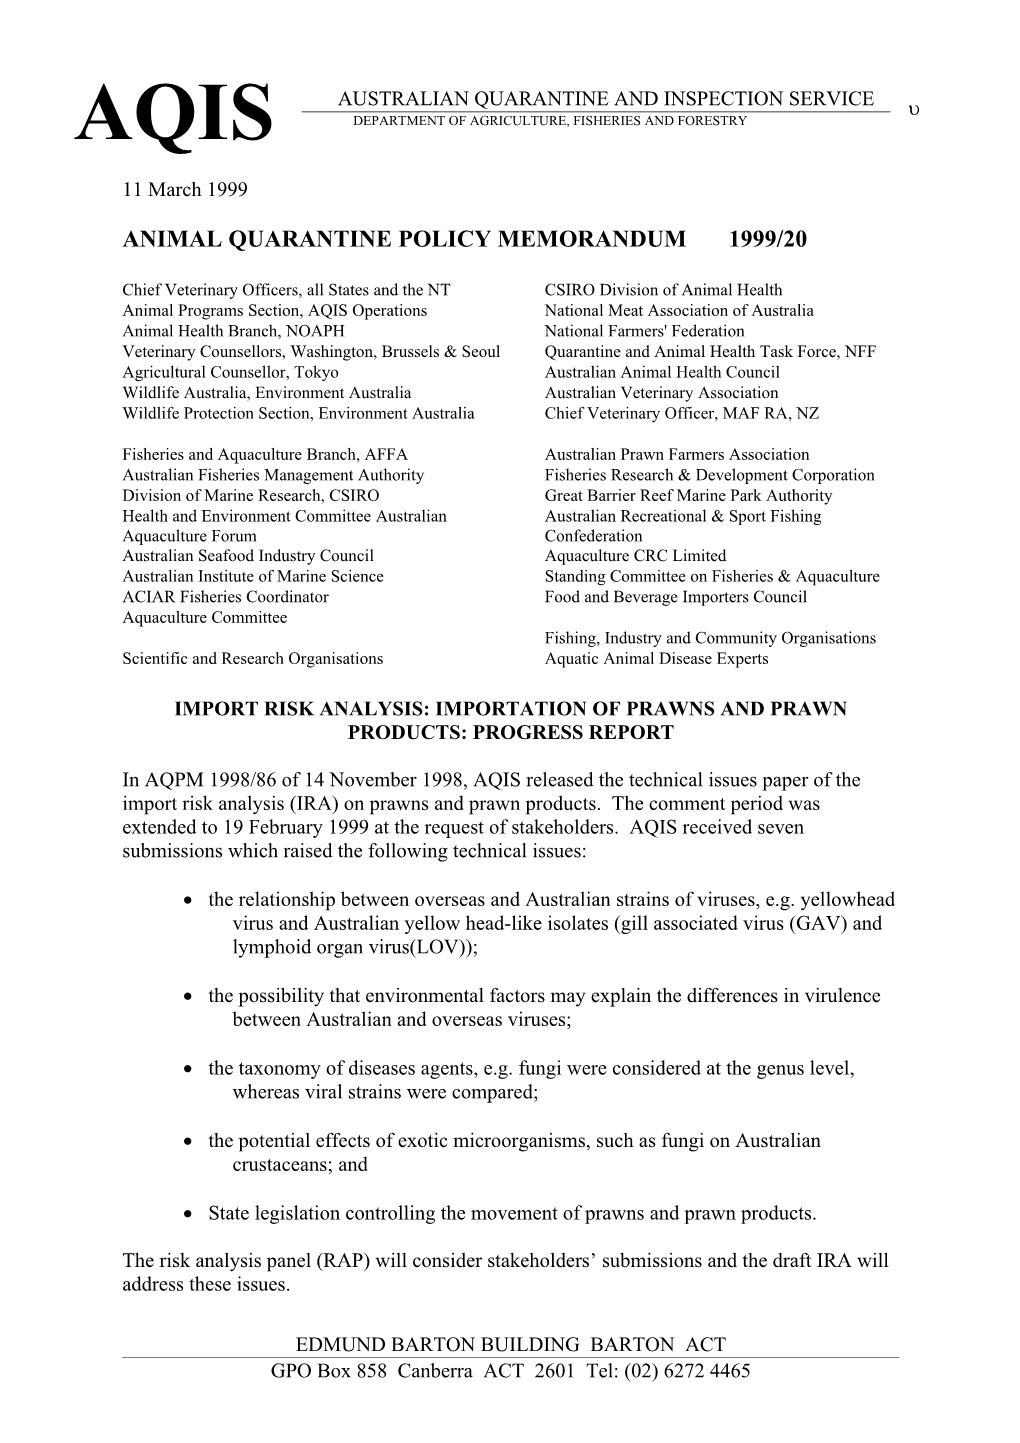 Animal Quarantine Policy Memorandum 1999/20